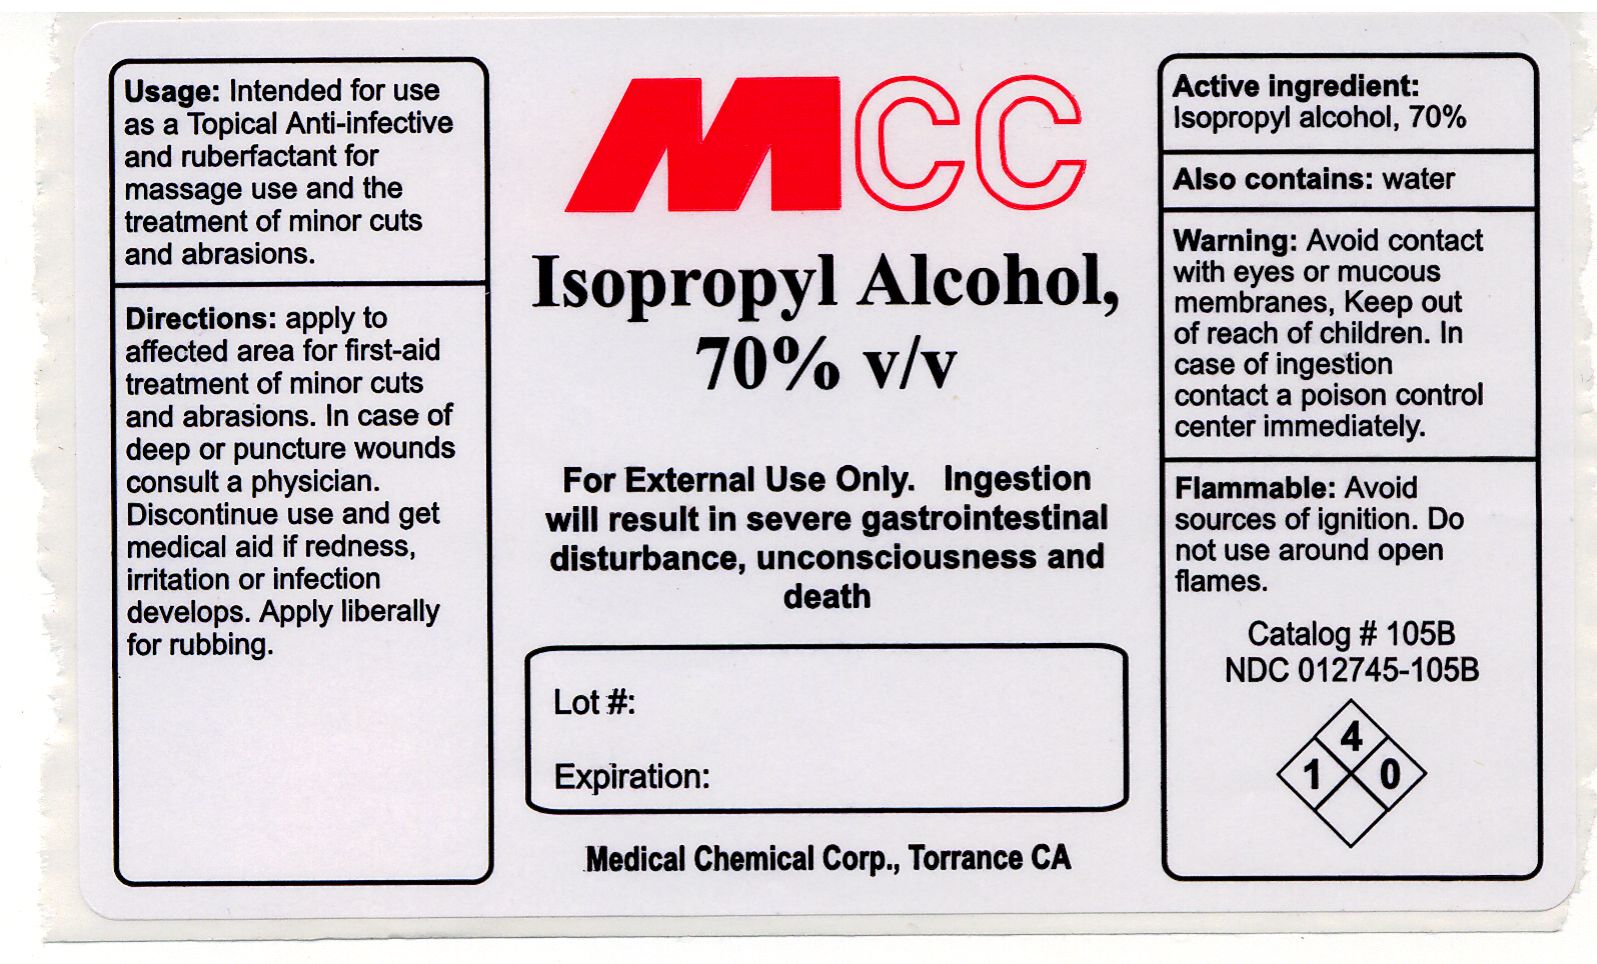 Image of Isopropyl Alcohol label